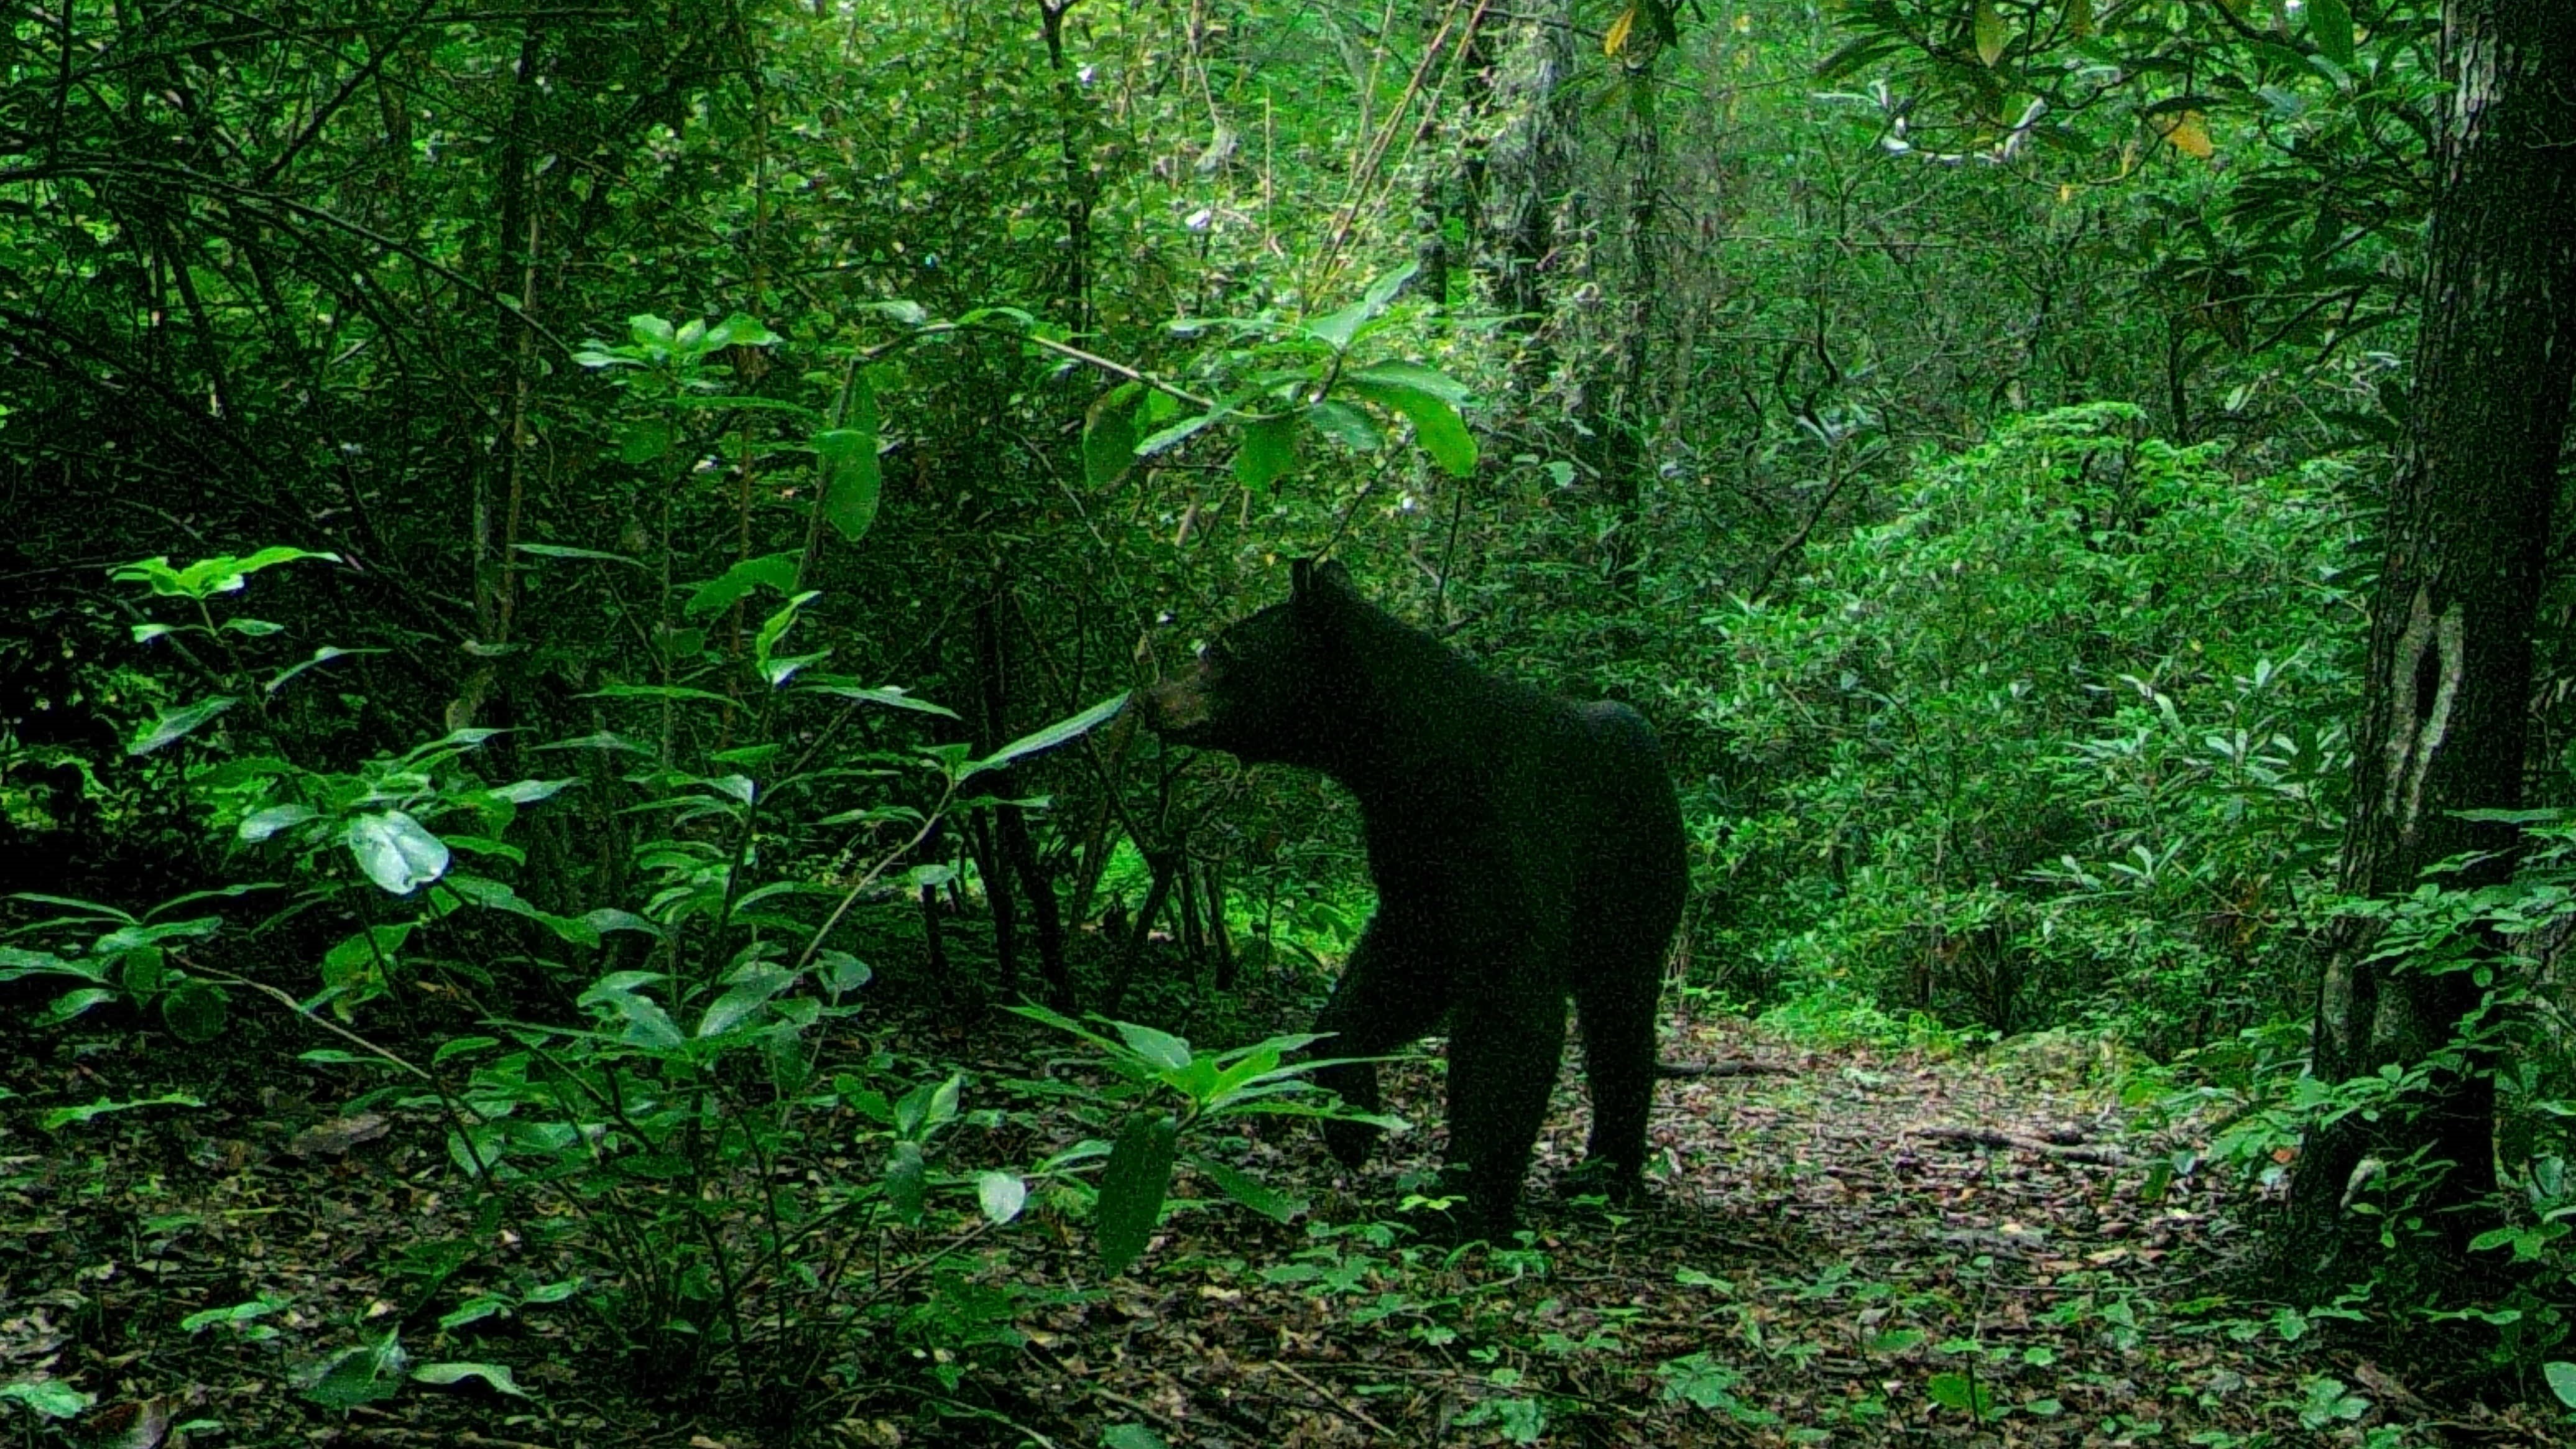 Black Bear in Forest